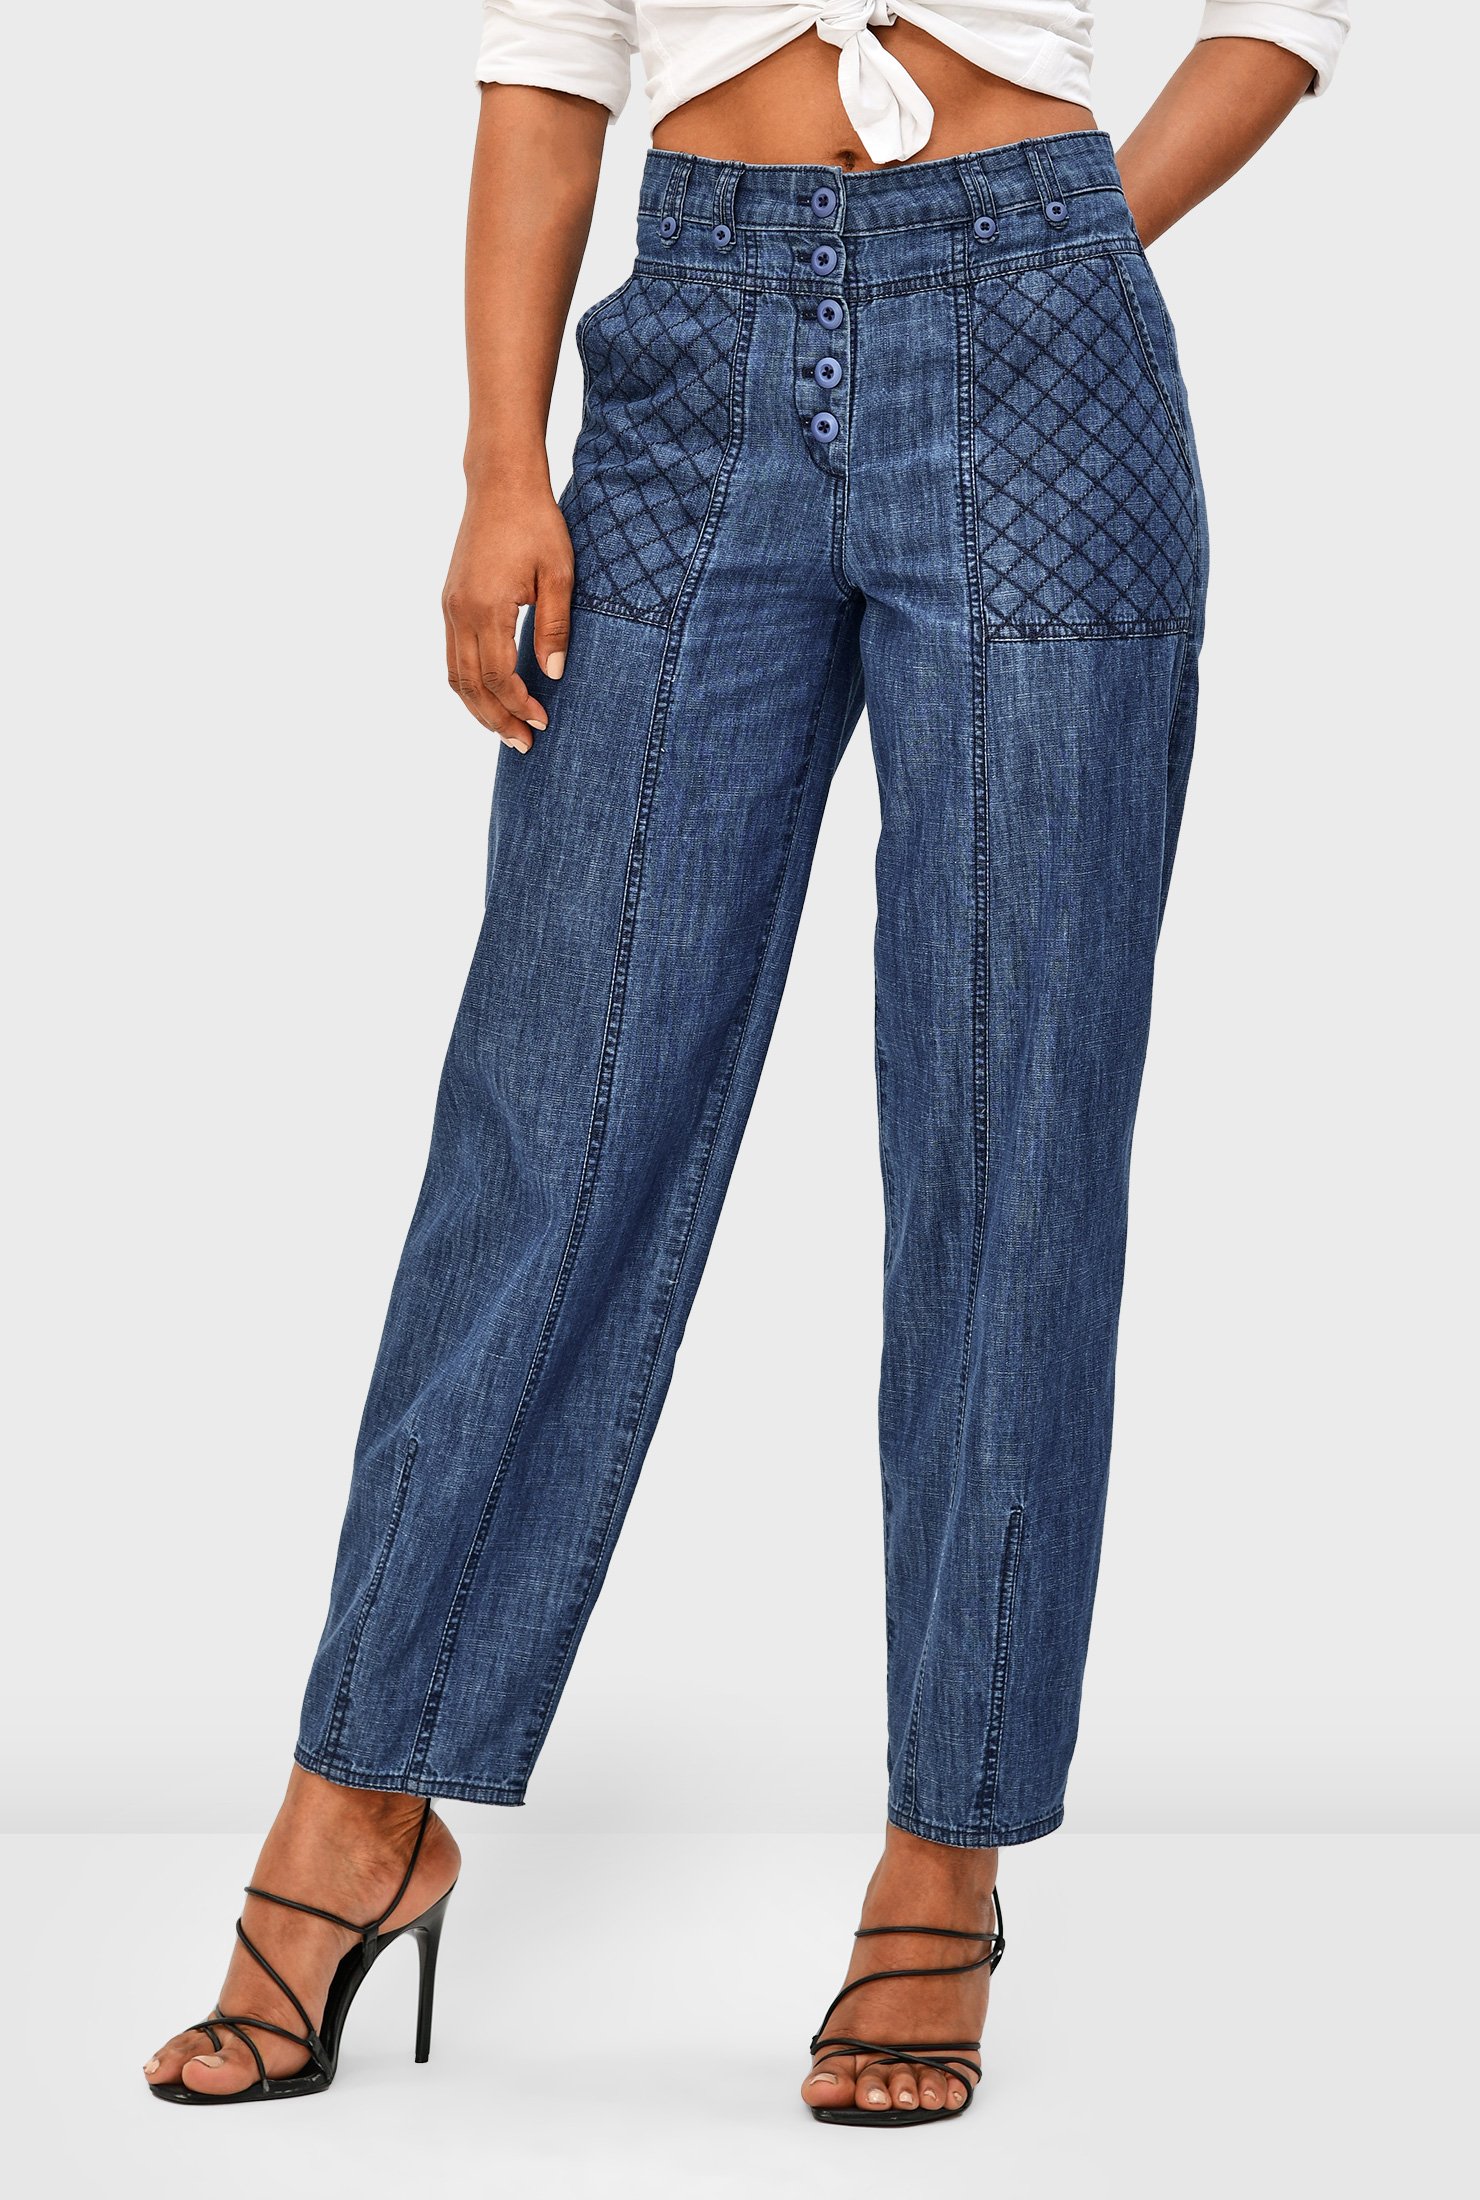 Shop eShakti waist | denim Button high cotton jeans fly